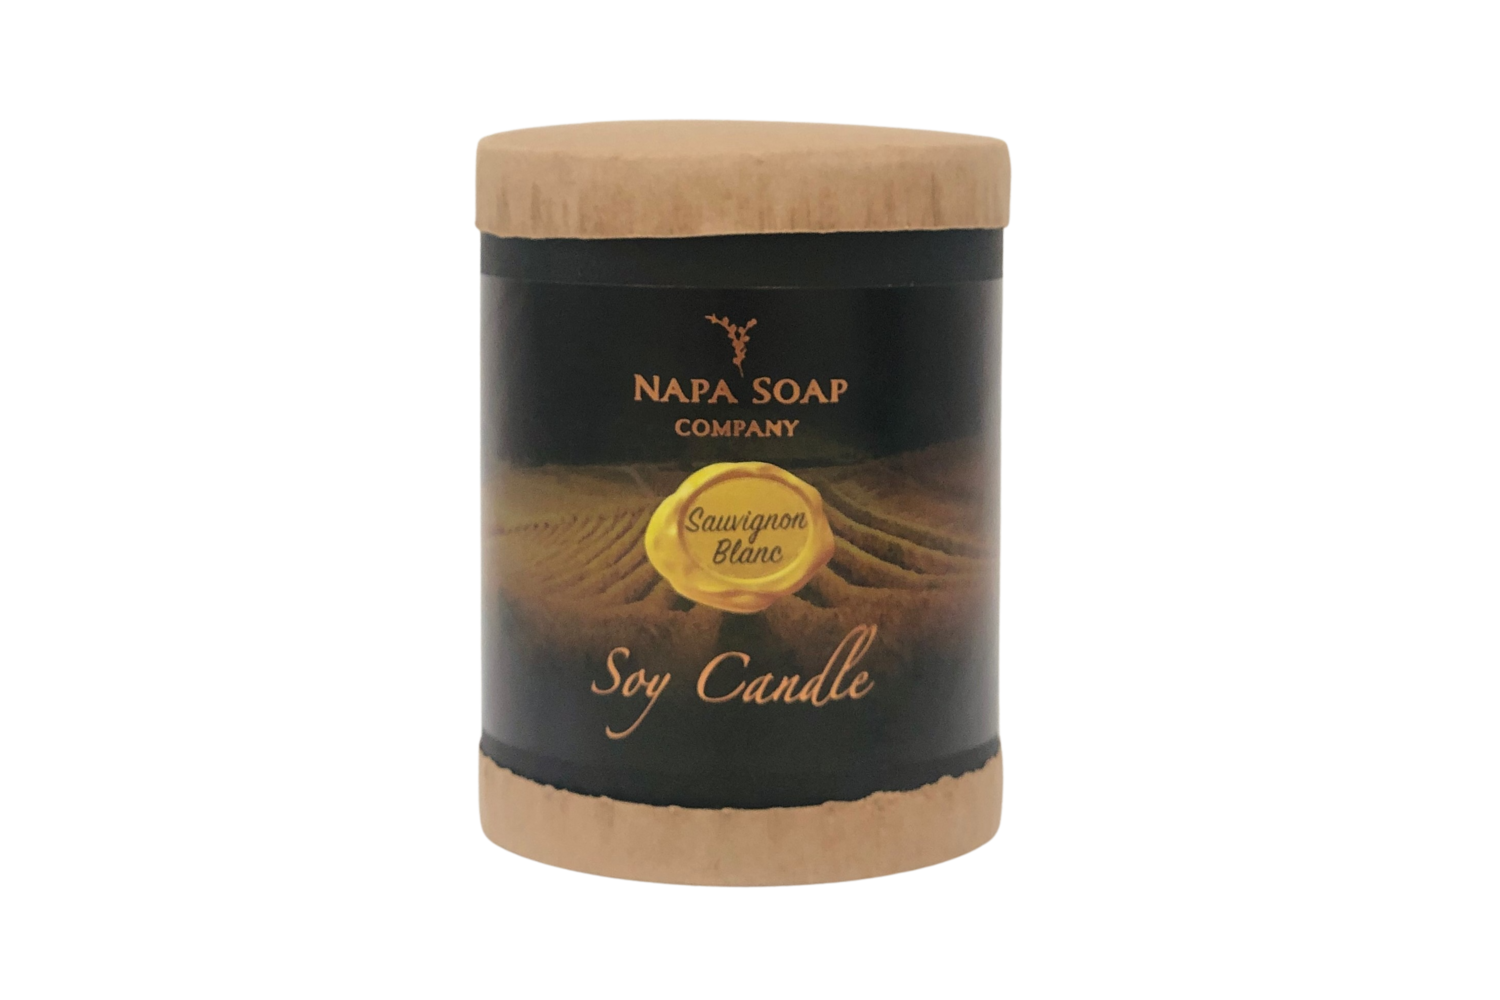 Napa Soap Company Sauvignon Blanc Candle